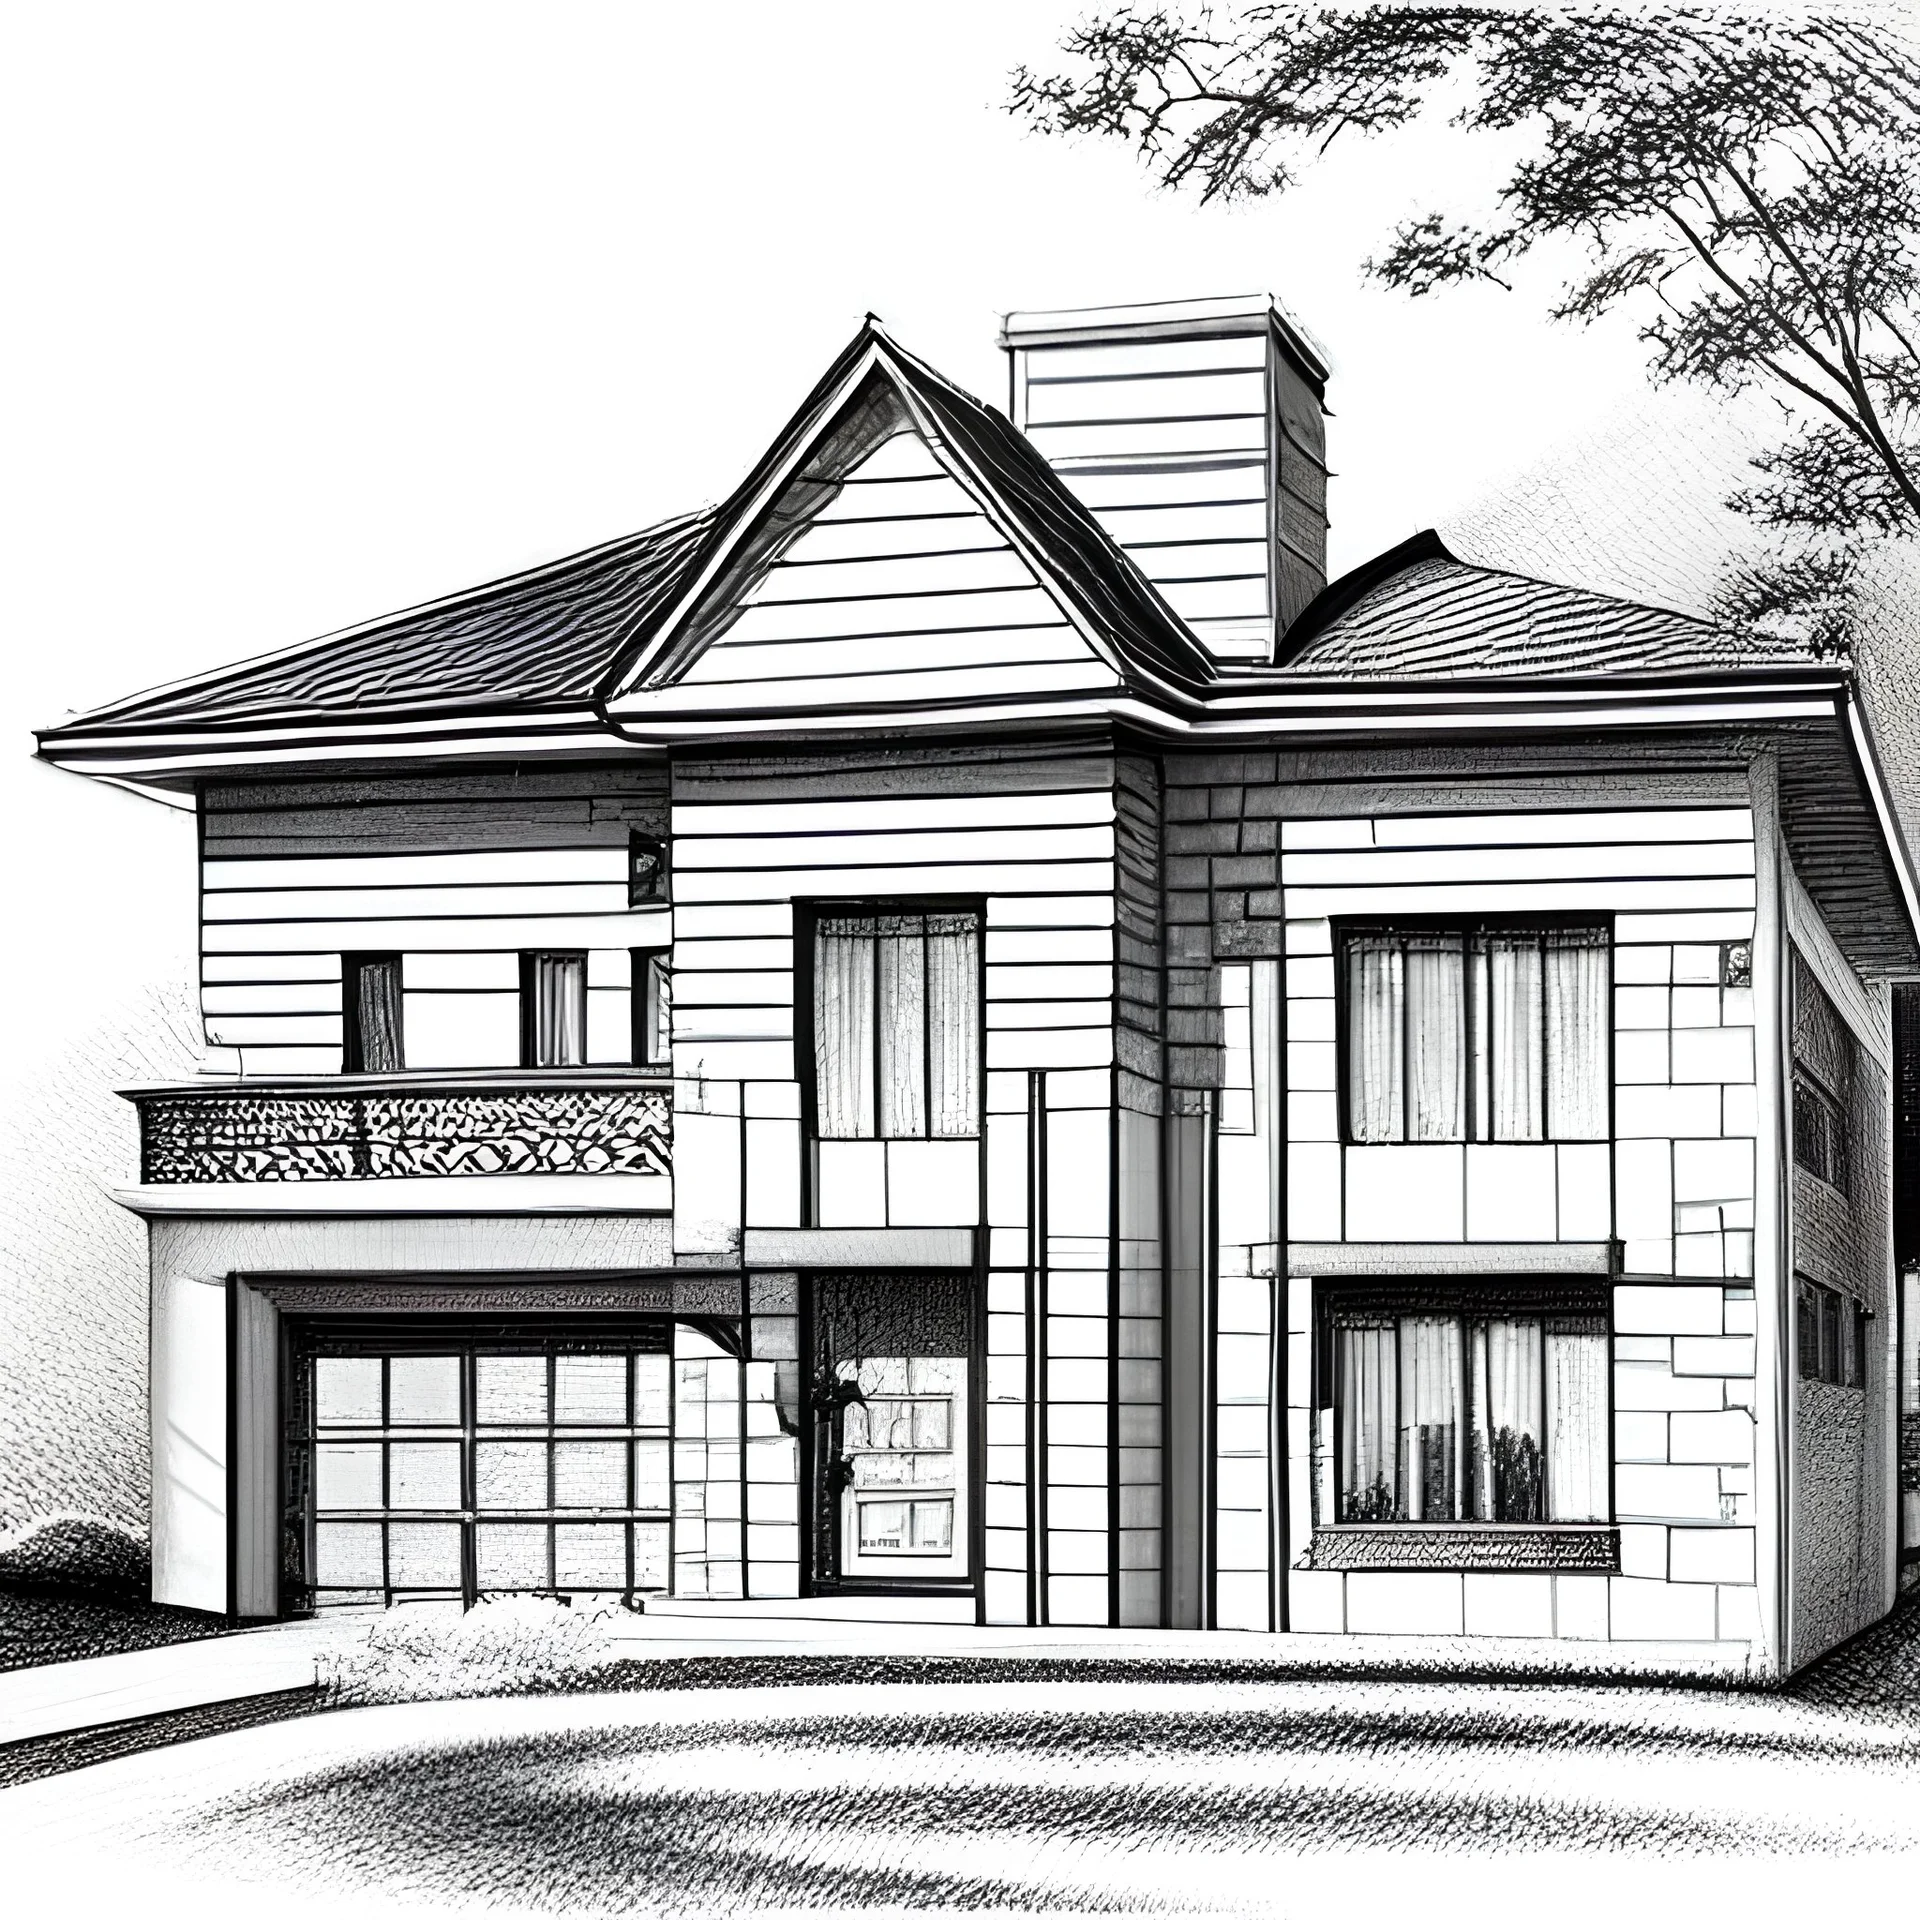 House sketch stock illustration. Illustration of classic - 38743997